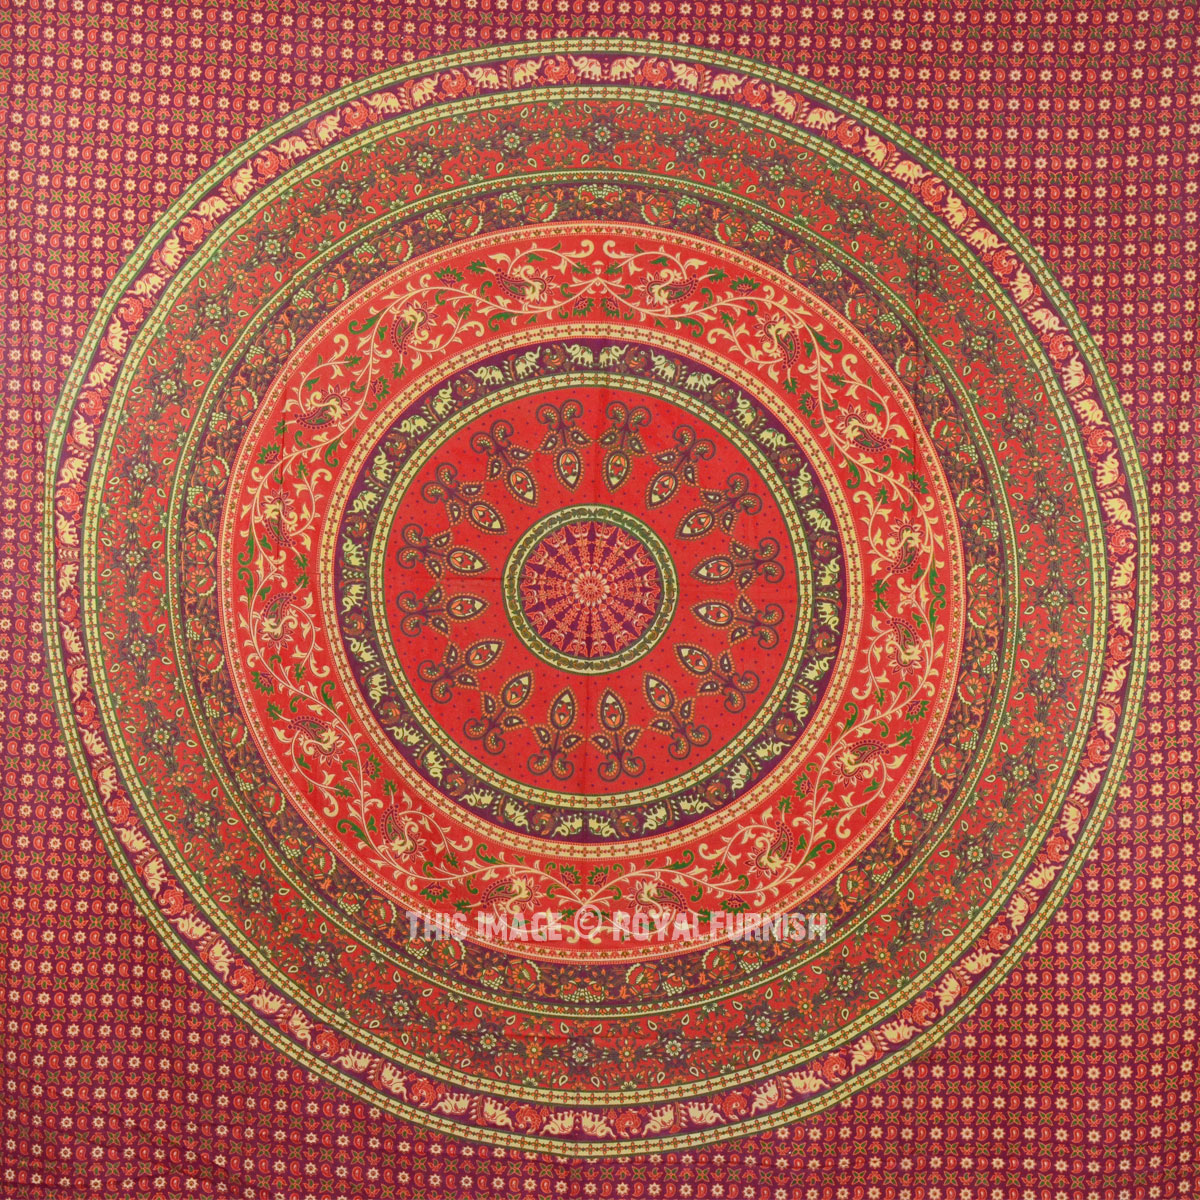 Multi Tye &Dye Art Bohemian Tapestry Mandala Round Mandala Tapestry Wall Hanging